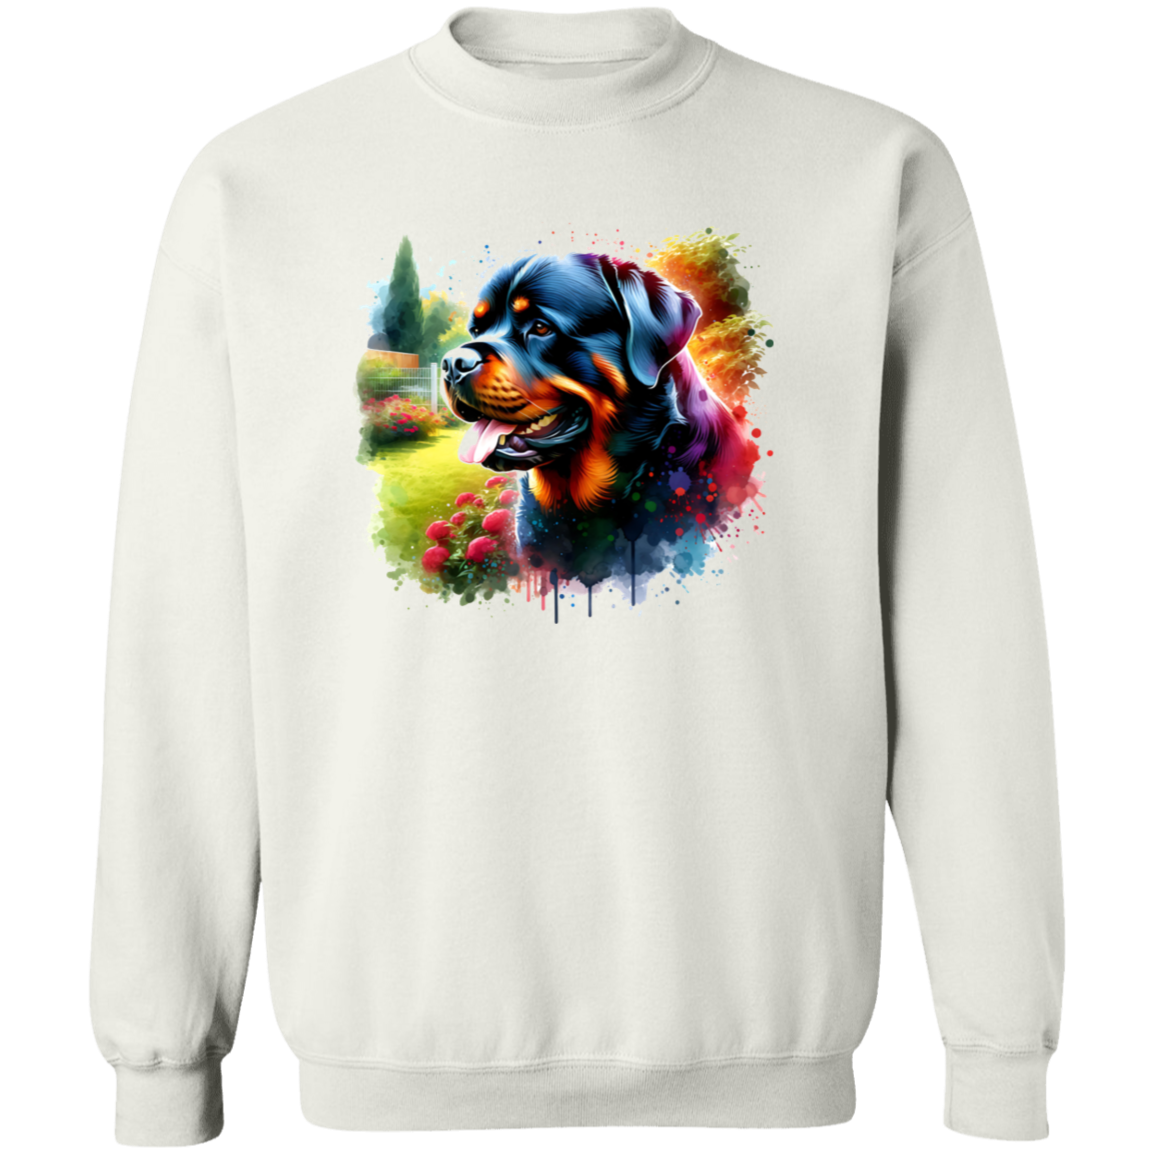 Rottweiler in Garden T-shirts, Hoodies and Sweatshirts